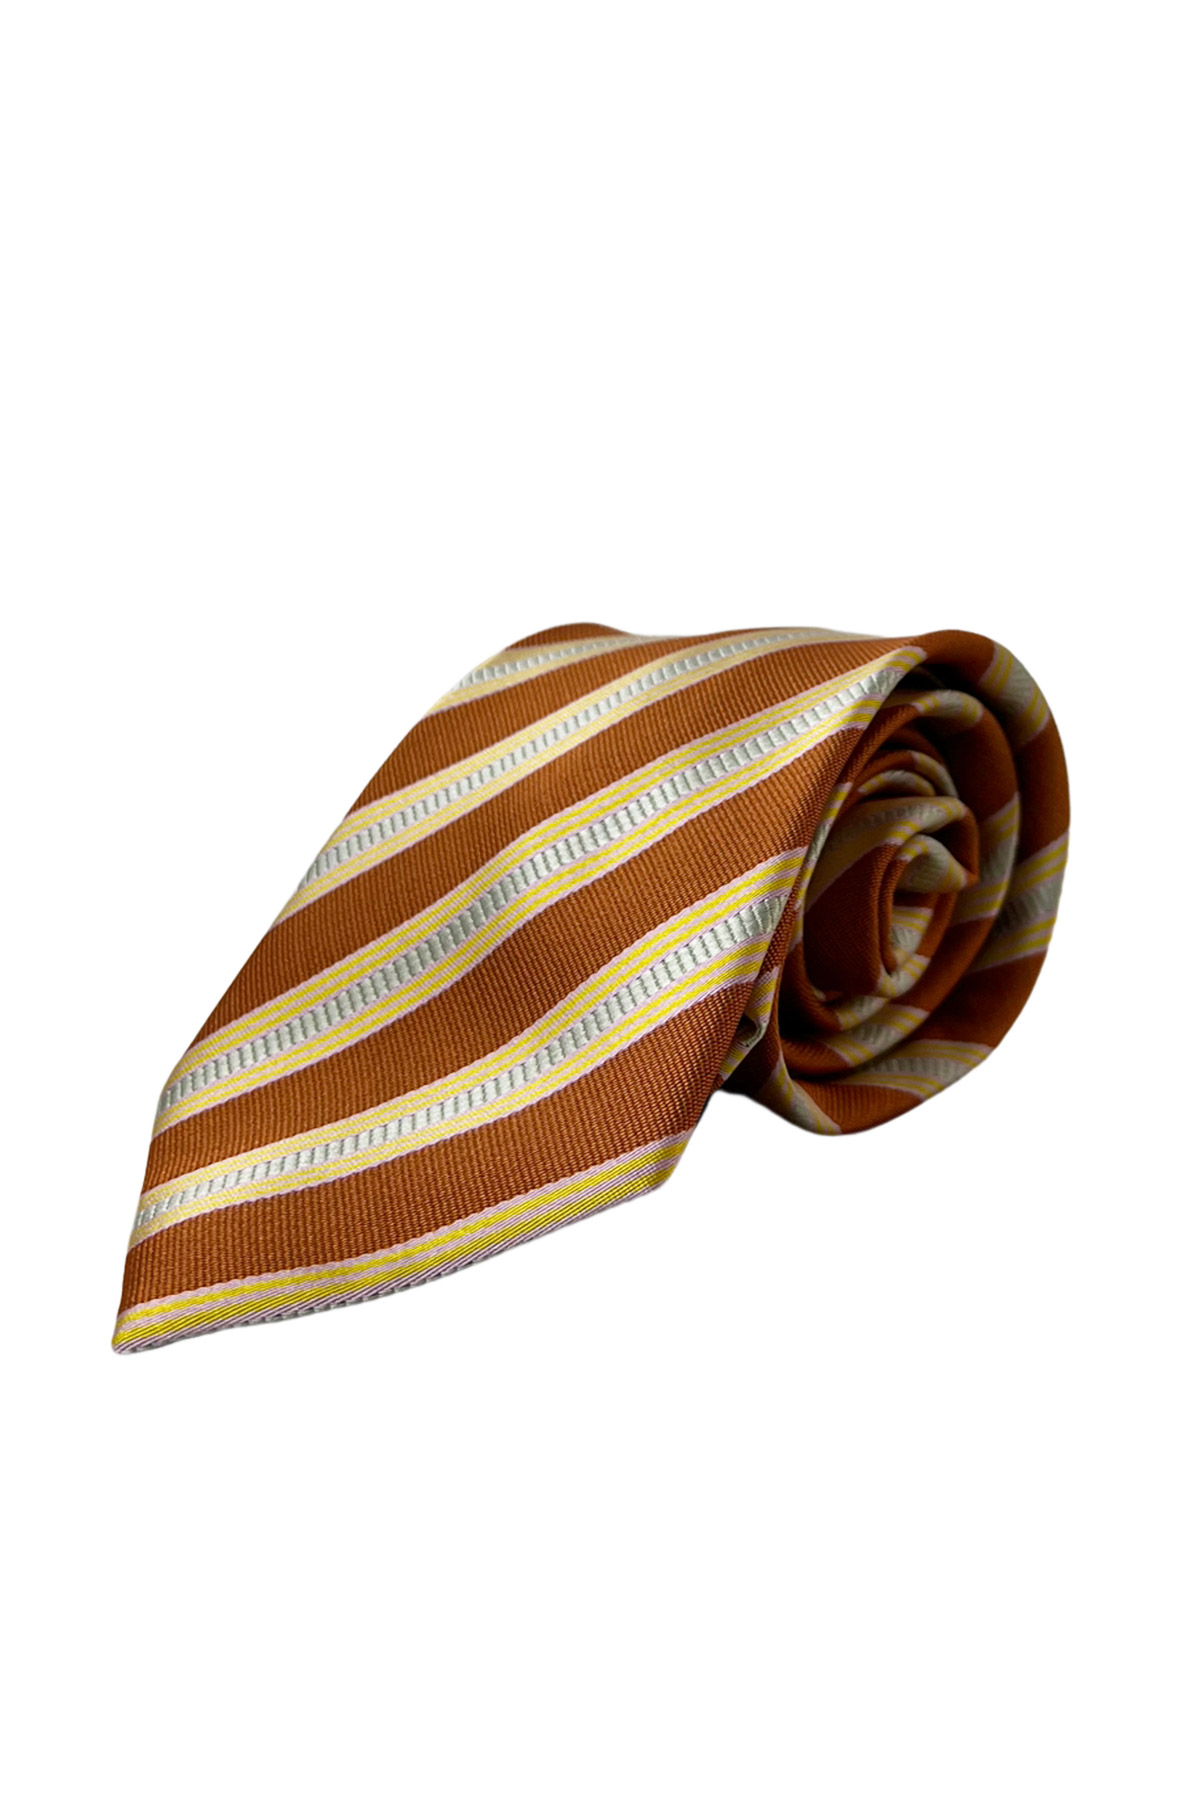 Cravatta uomo coccio e beige regimental 8cm da cerimonia elegante effetto seta